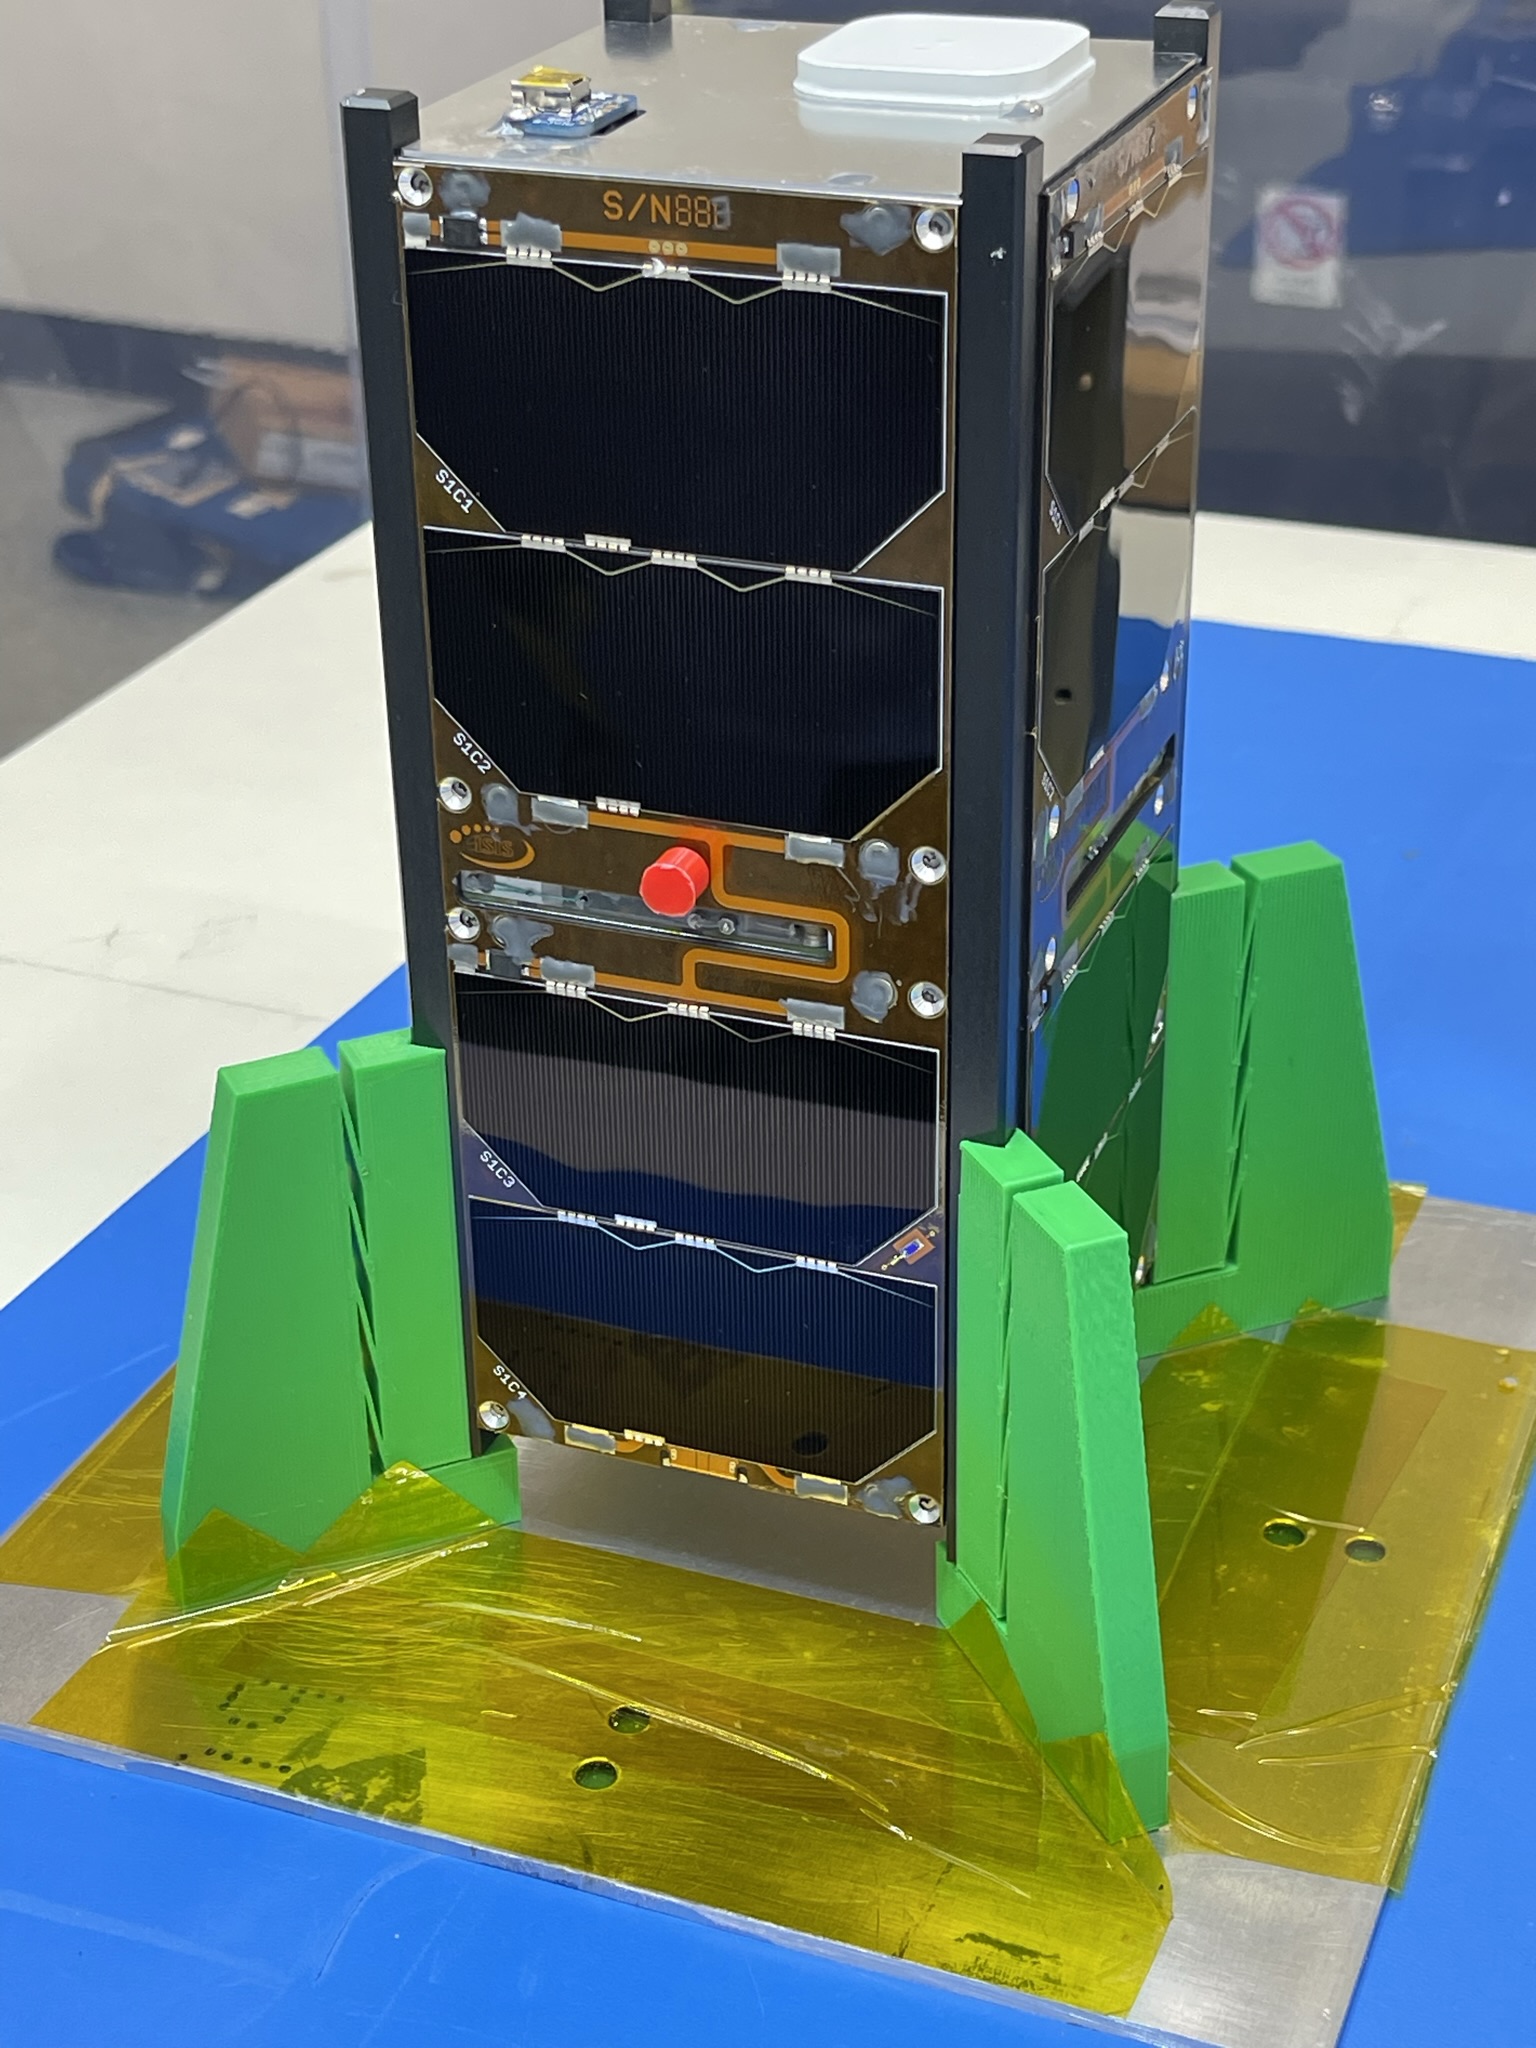 The finished CubeSat TJREVERB